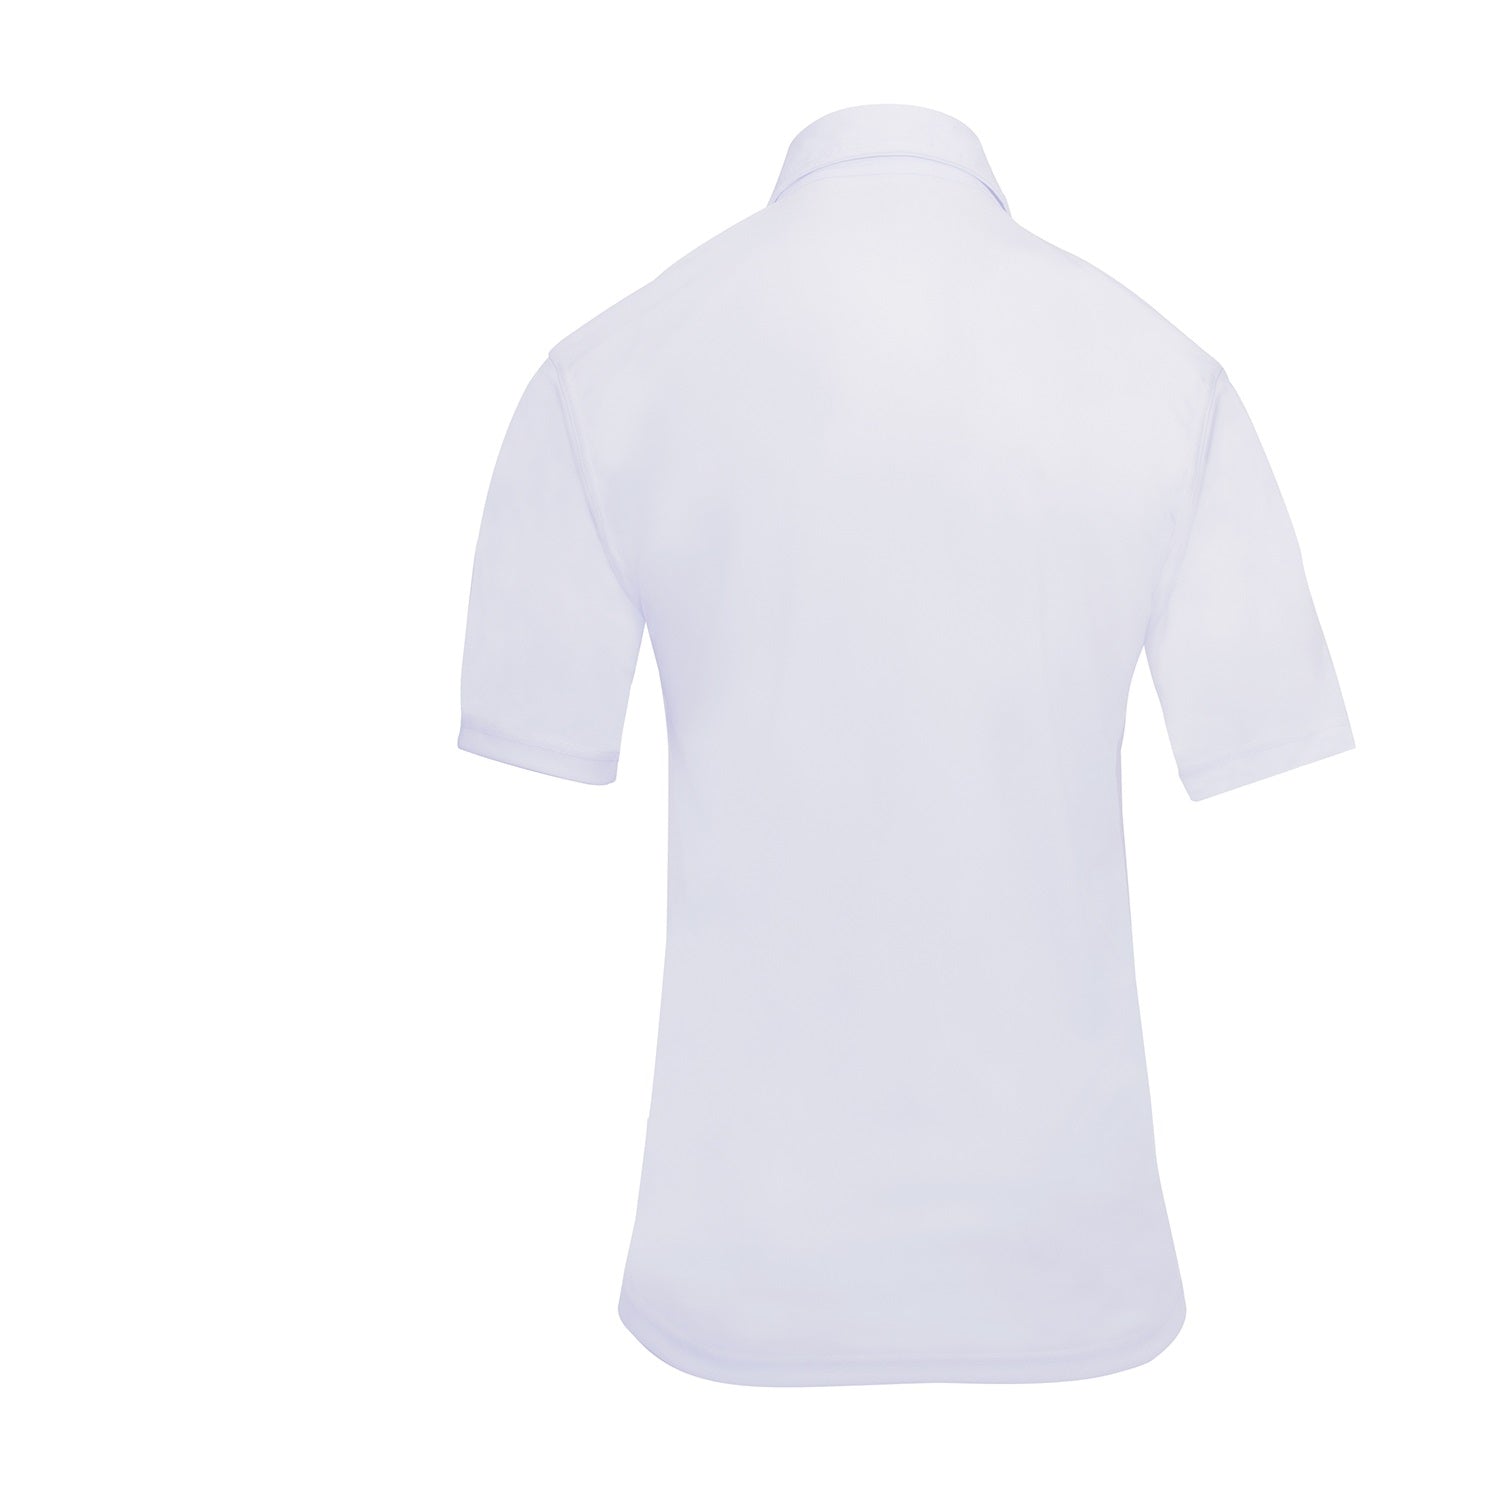 Rothco Tactical Performance Polo Shirt White